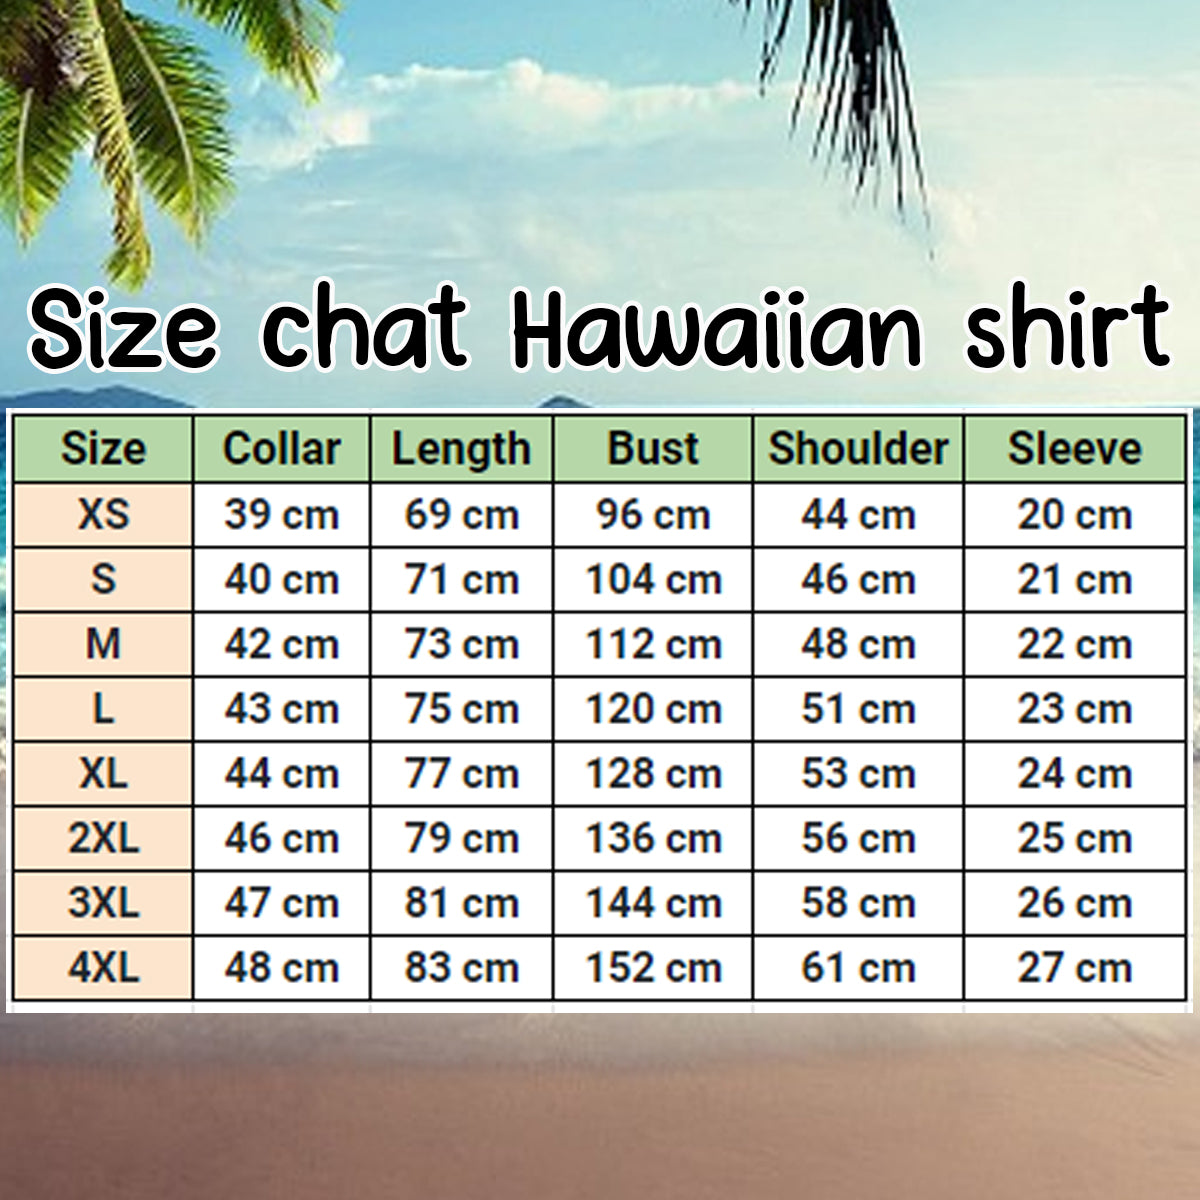 Green Theme Beer Wooden Barrel Hawaiian Shirt/ Summer aloha hawaii shirt for Men women